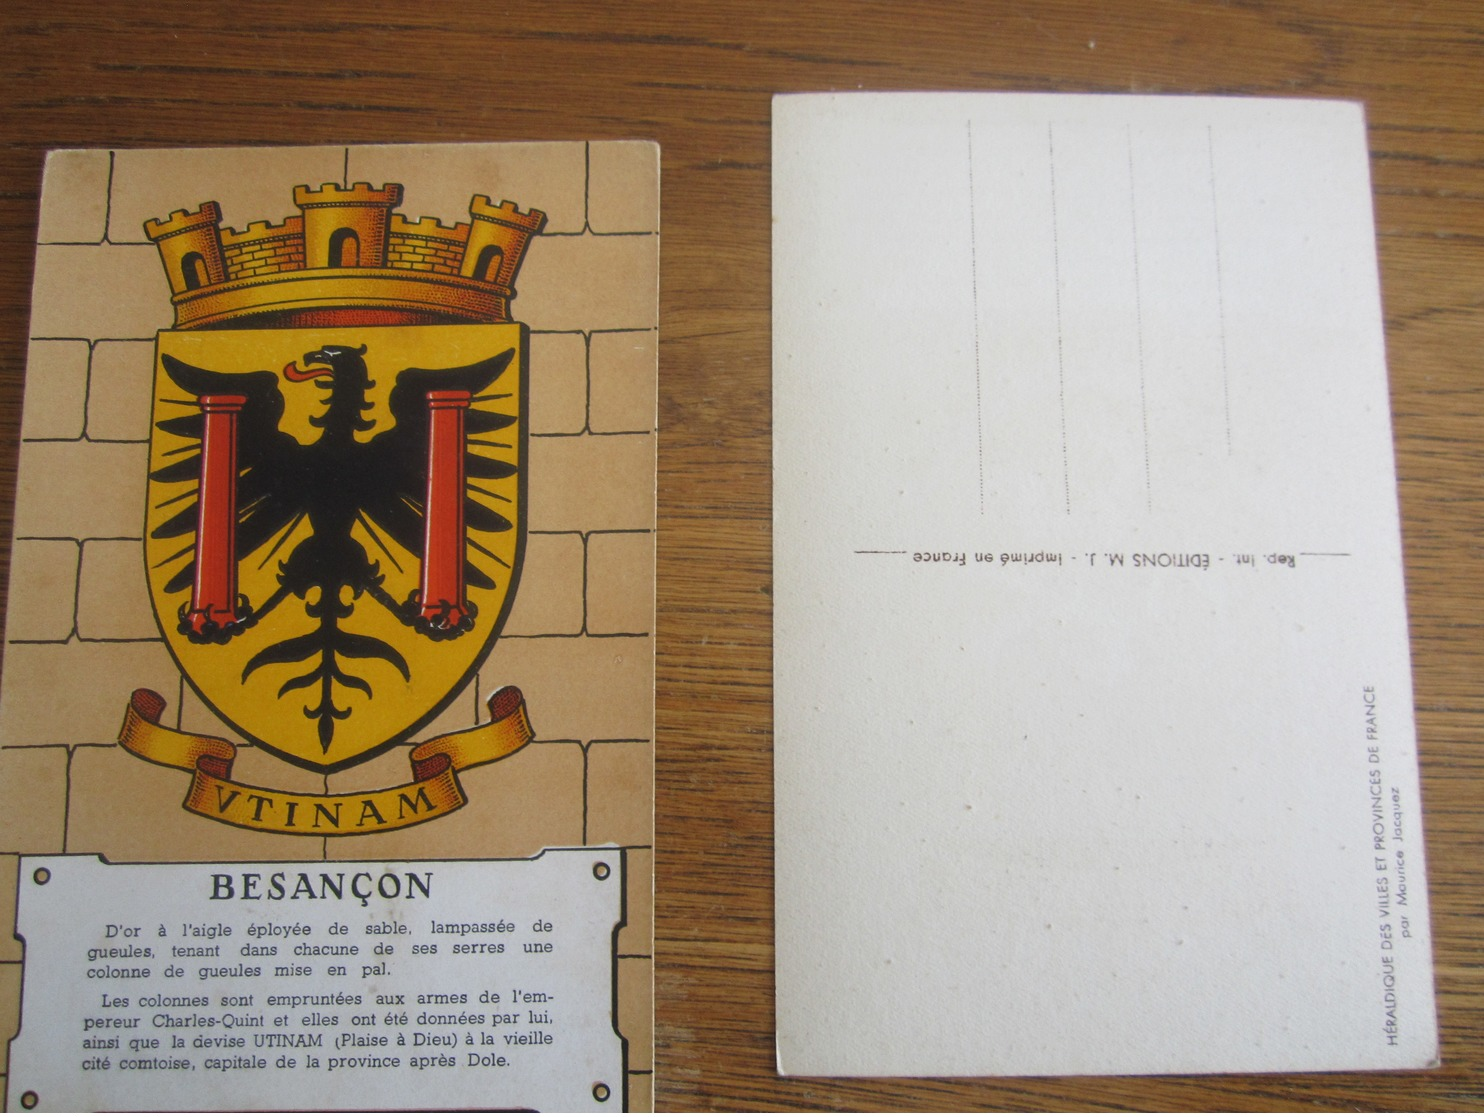 1408              BESANCON - Besancon